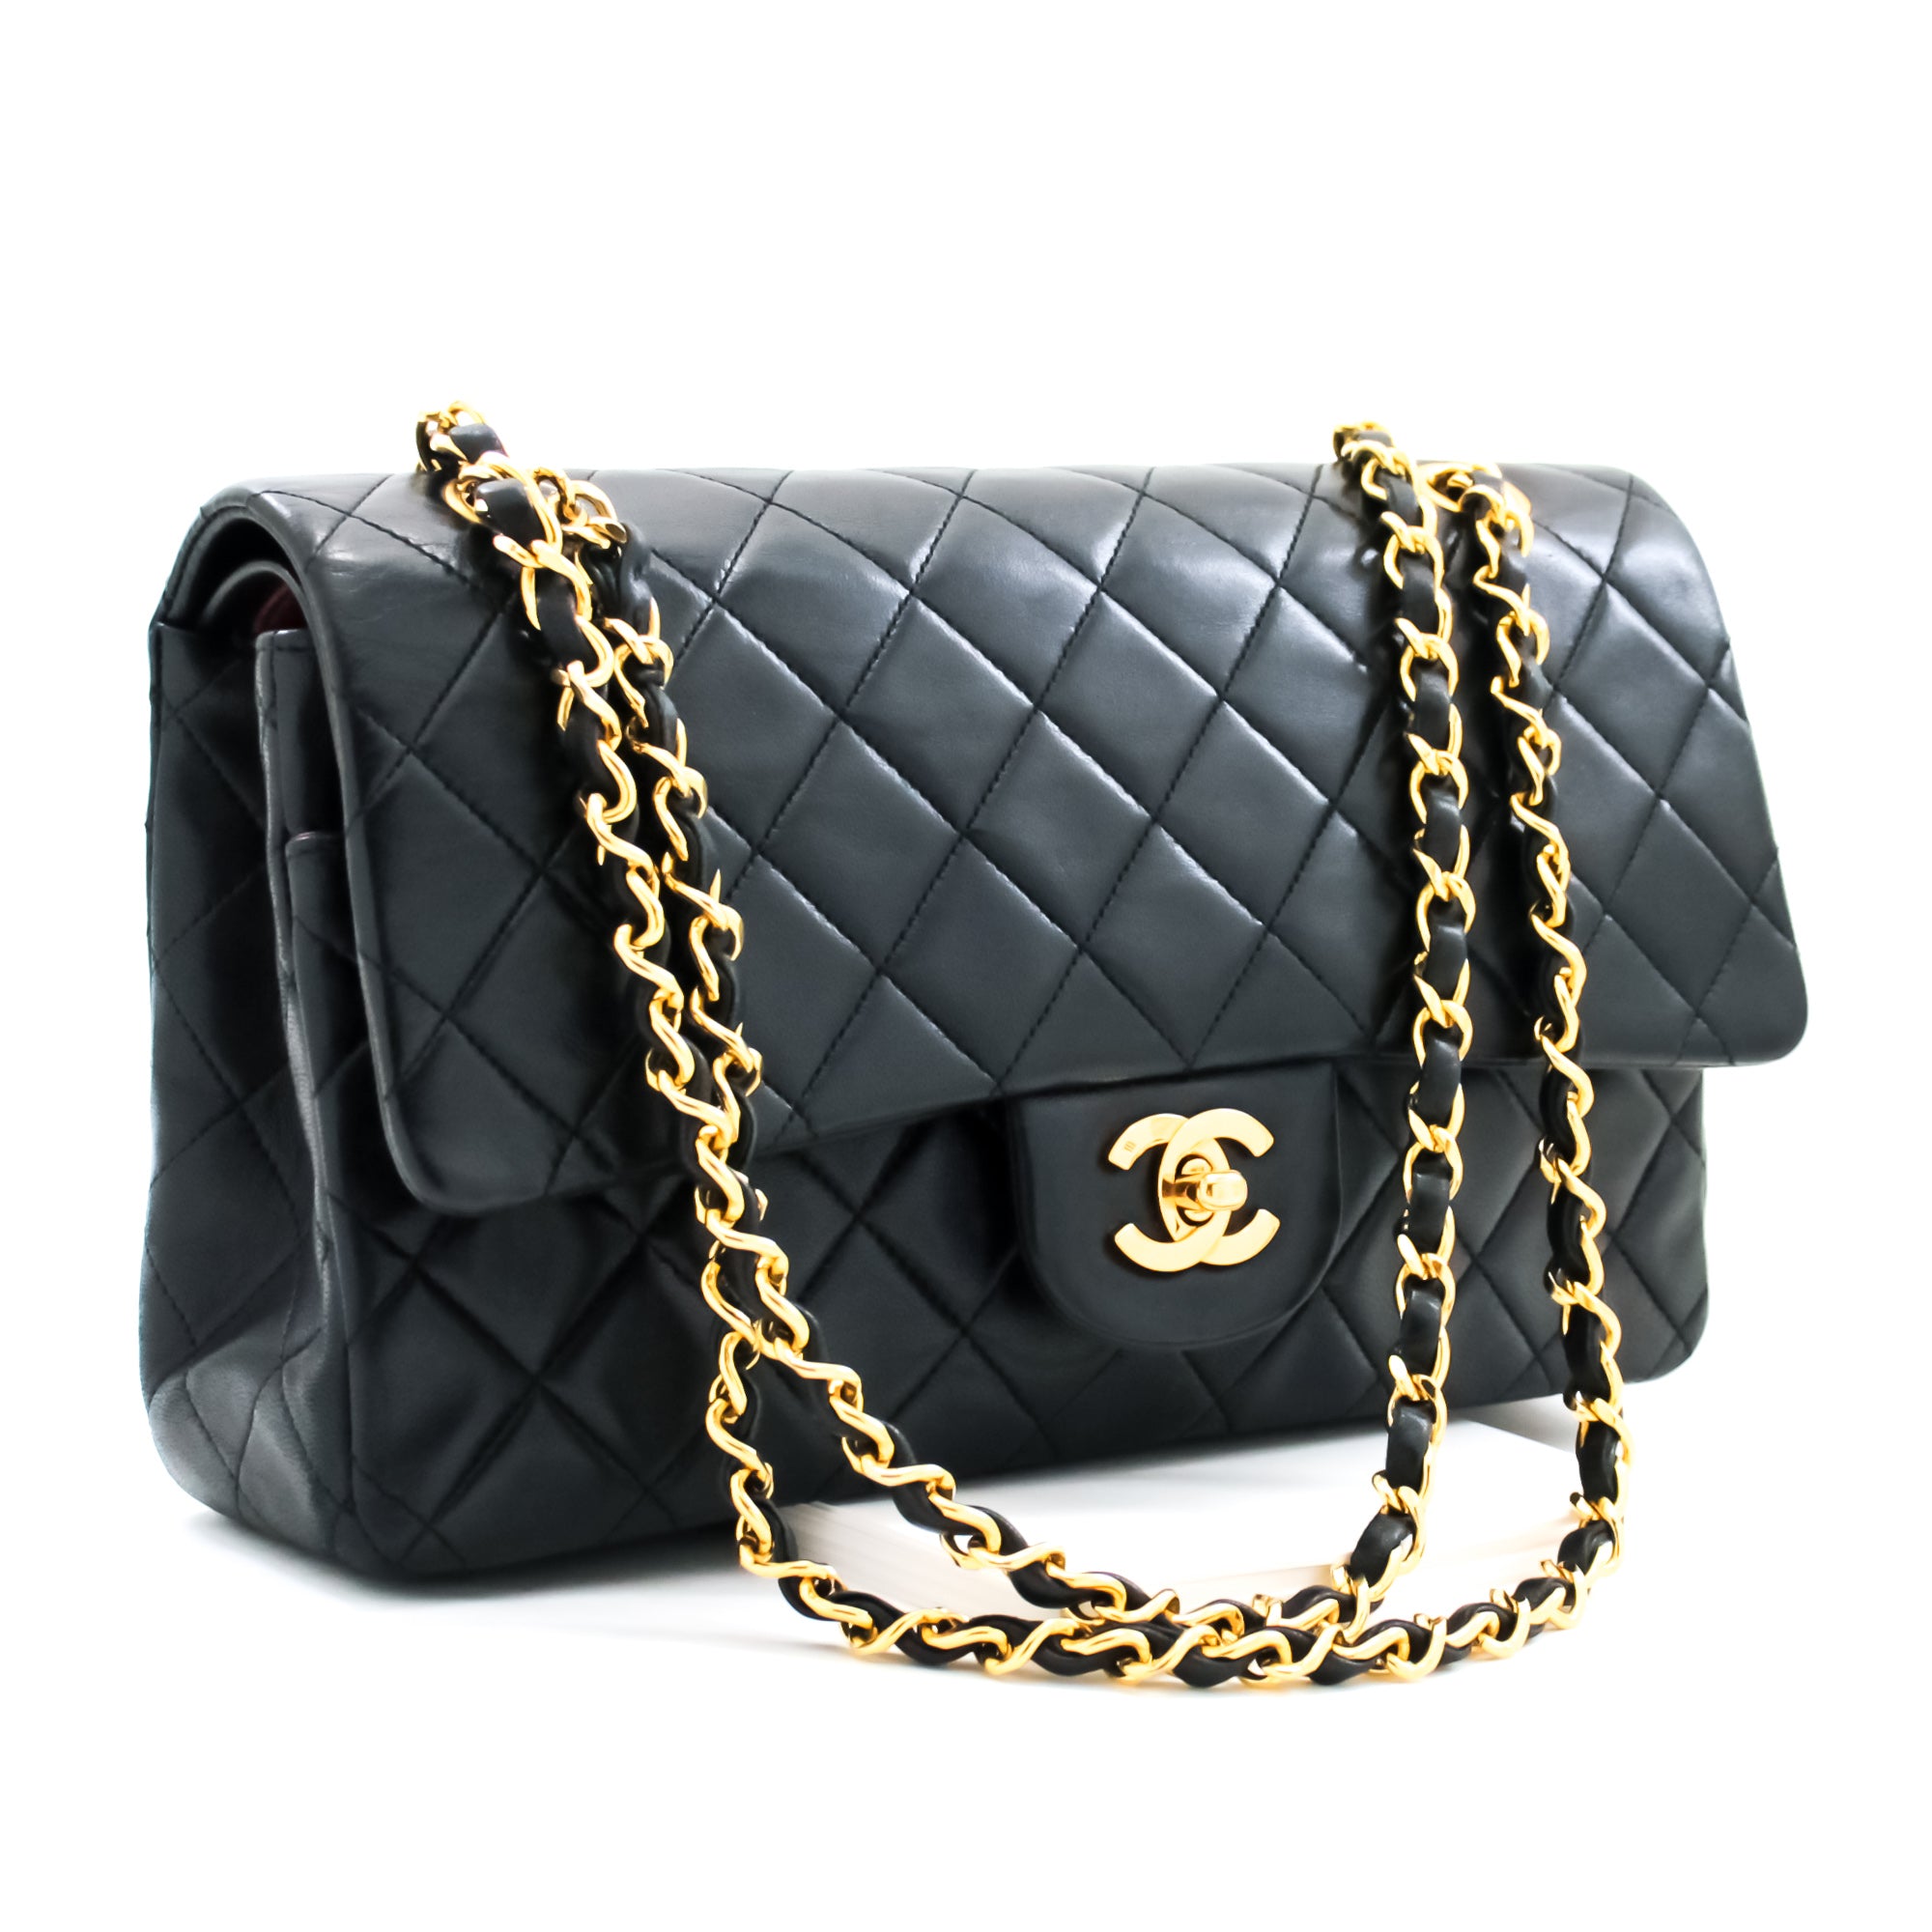 Chanel Classic Double Flap 10 Chain Shoulder Bag Black Lambskin i65